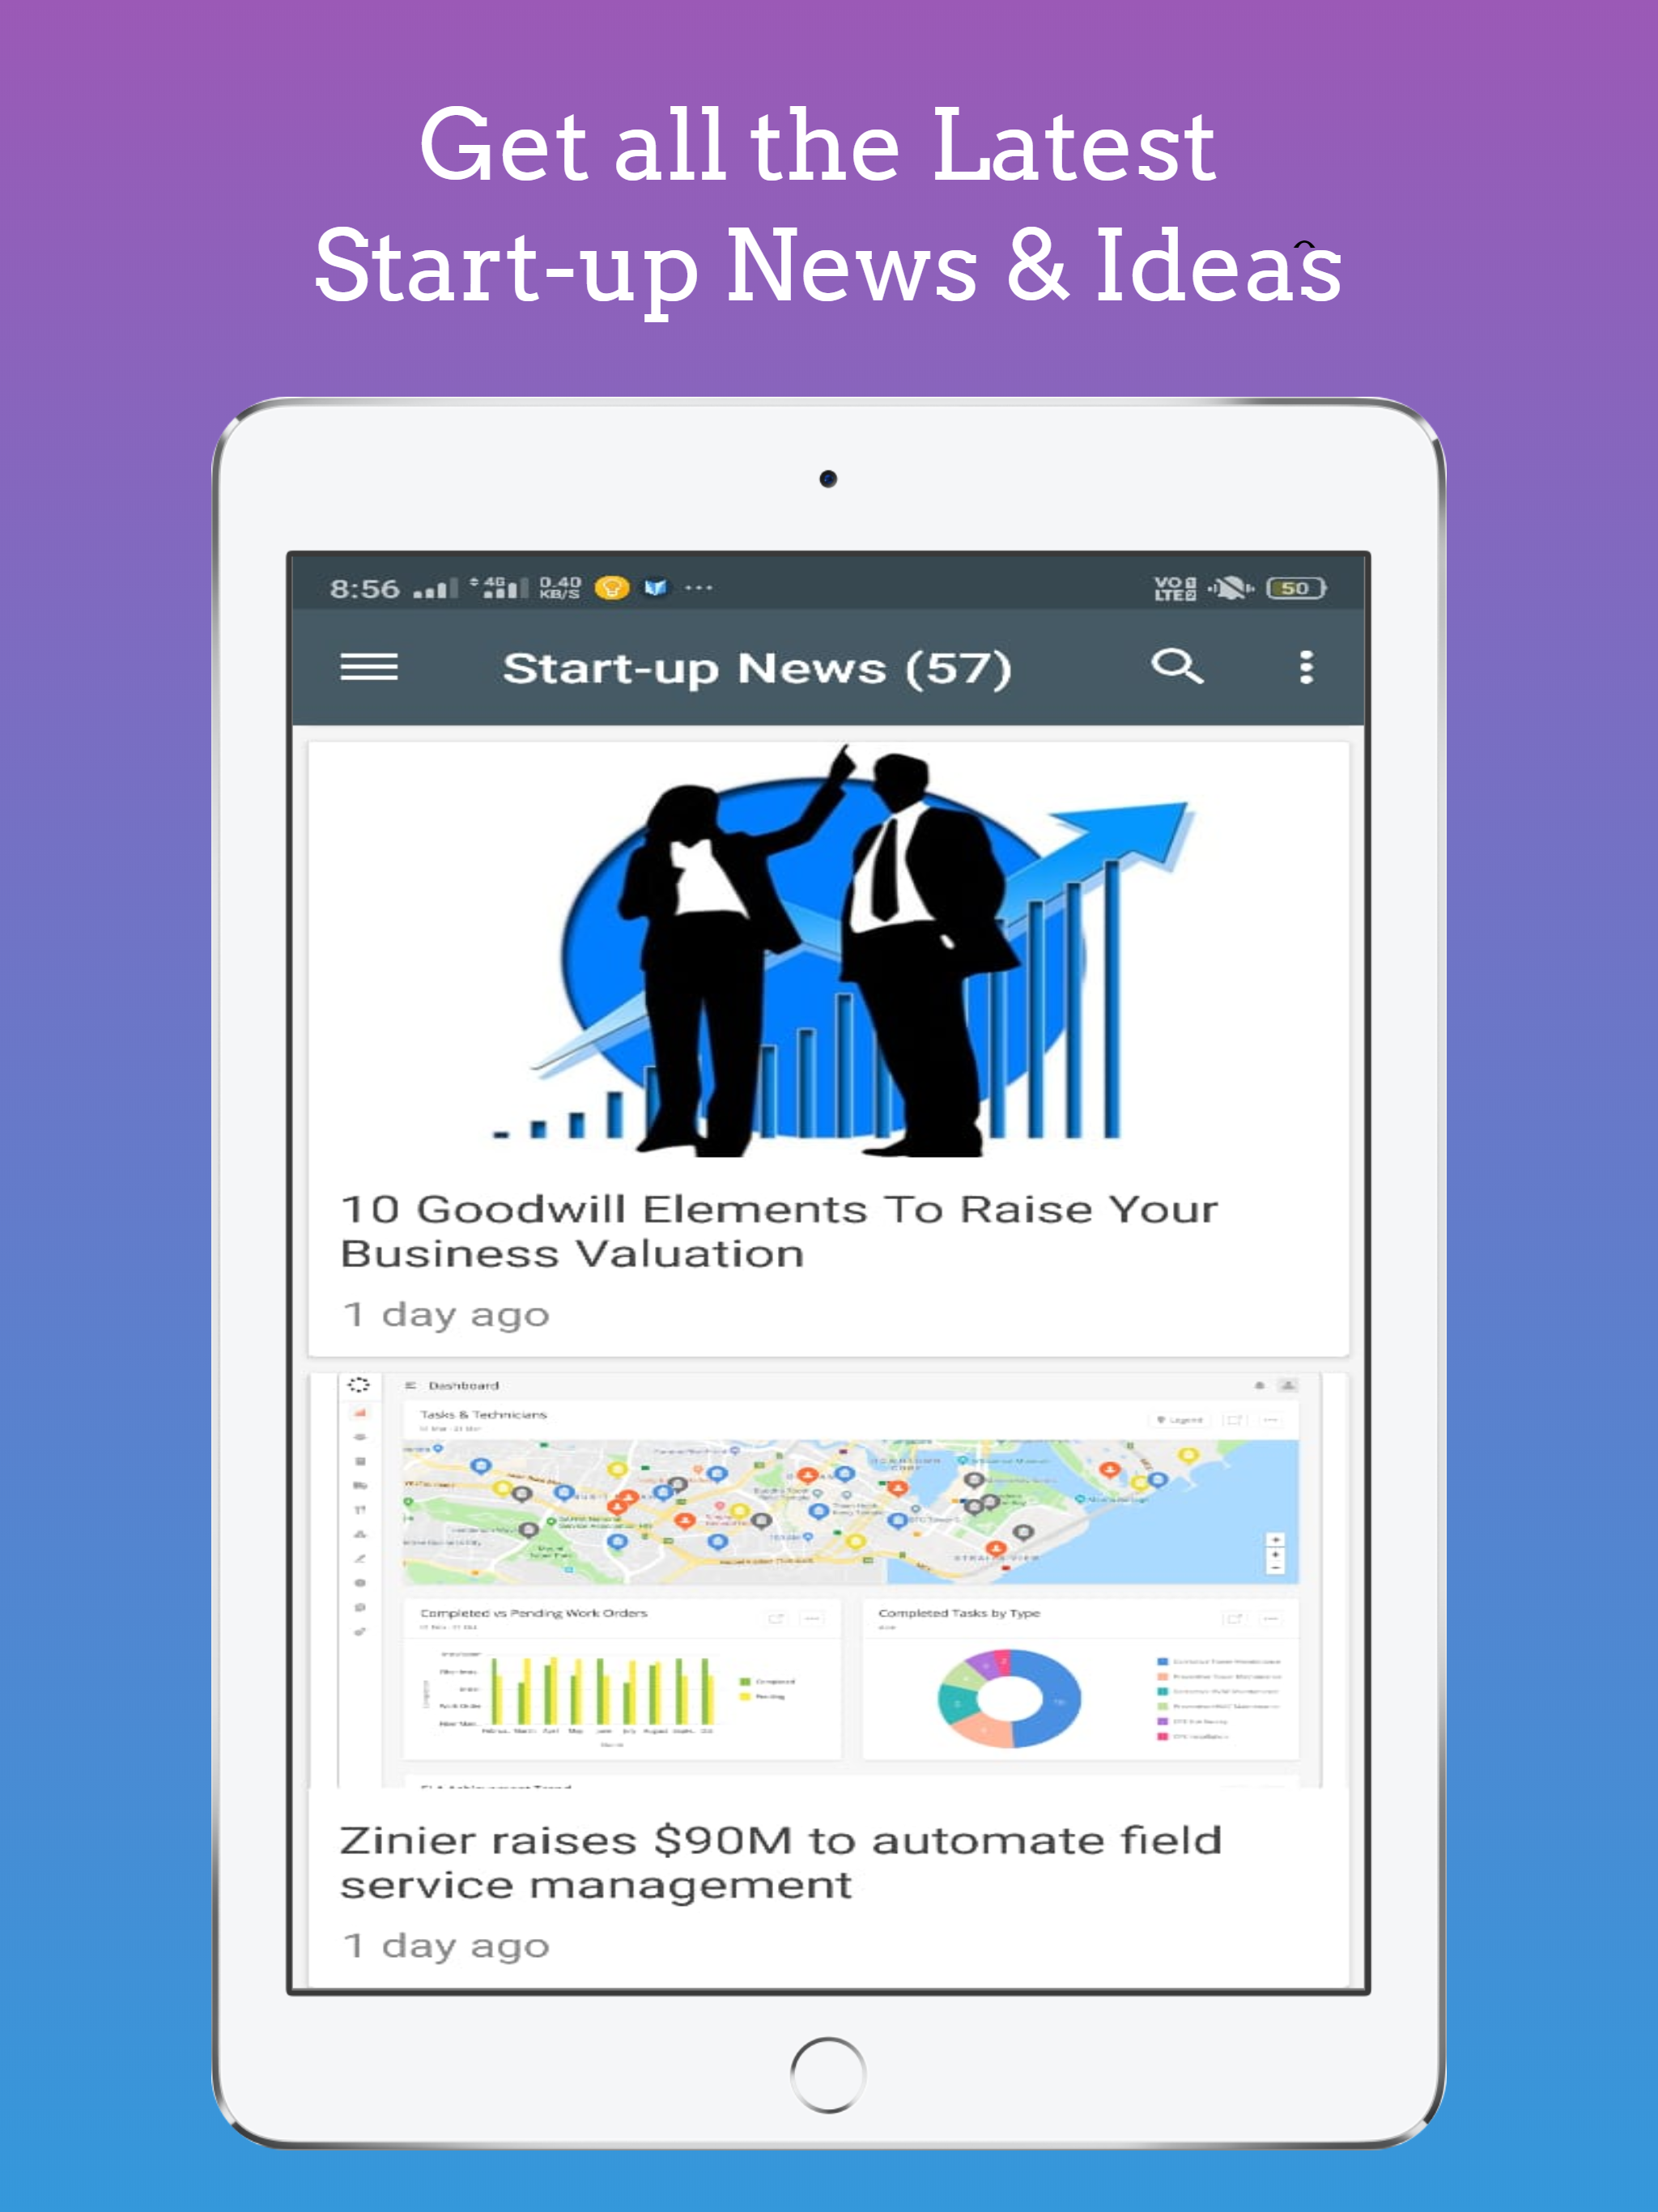 World News 📰: A Global and International News App